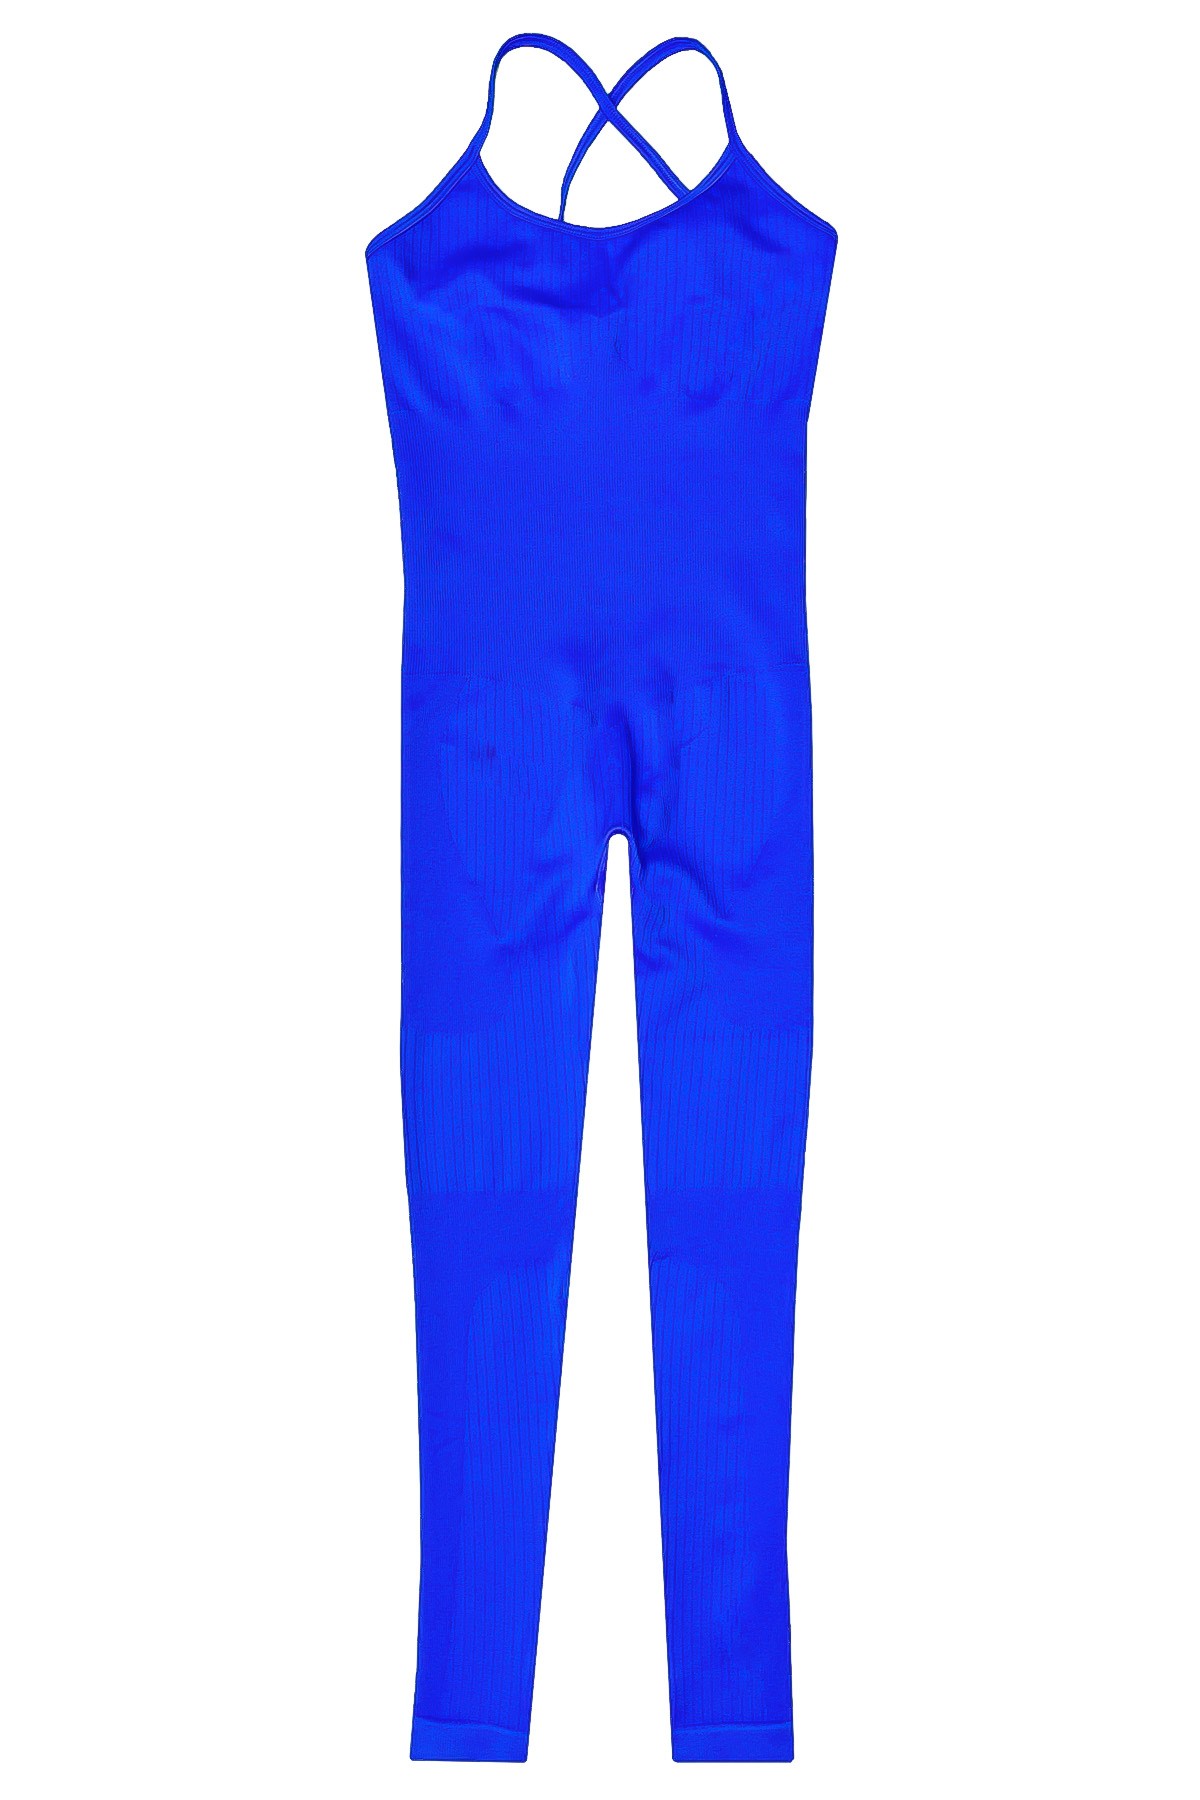 Pou - ملابس ضيقة متناسقة - أزرق ساكس